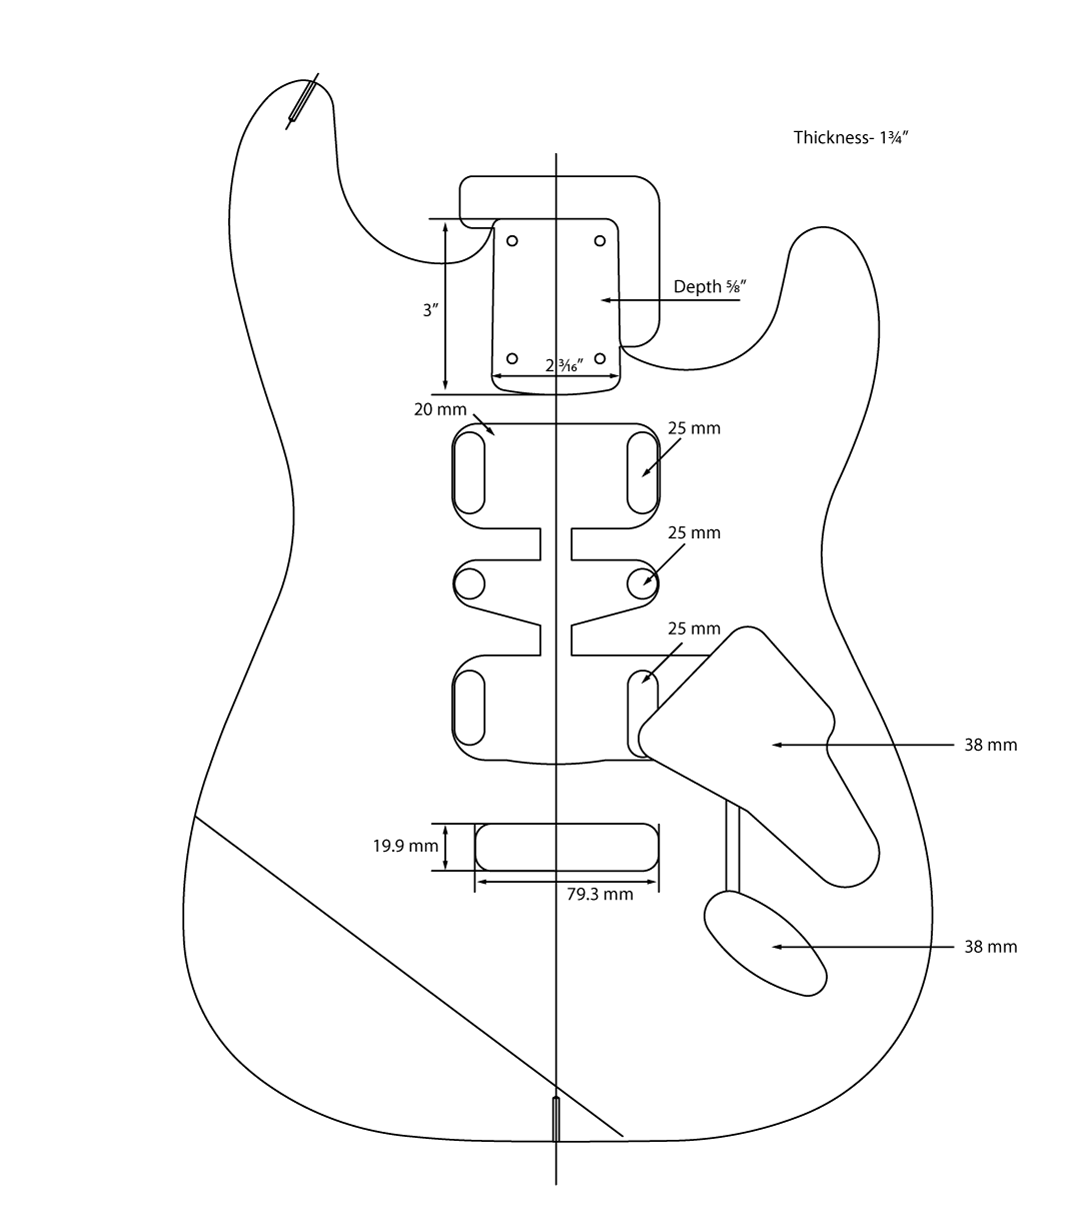 AE Guitars® S-Style Alder Replacement Guitar Body Mercury